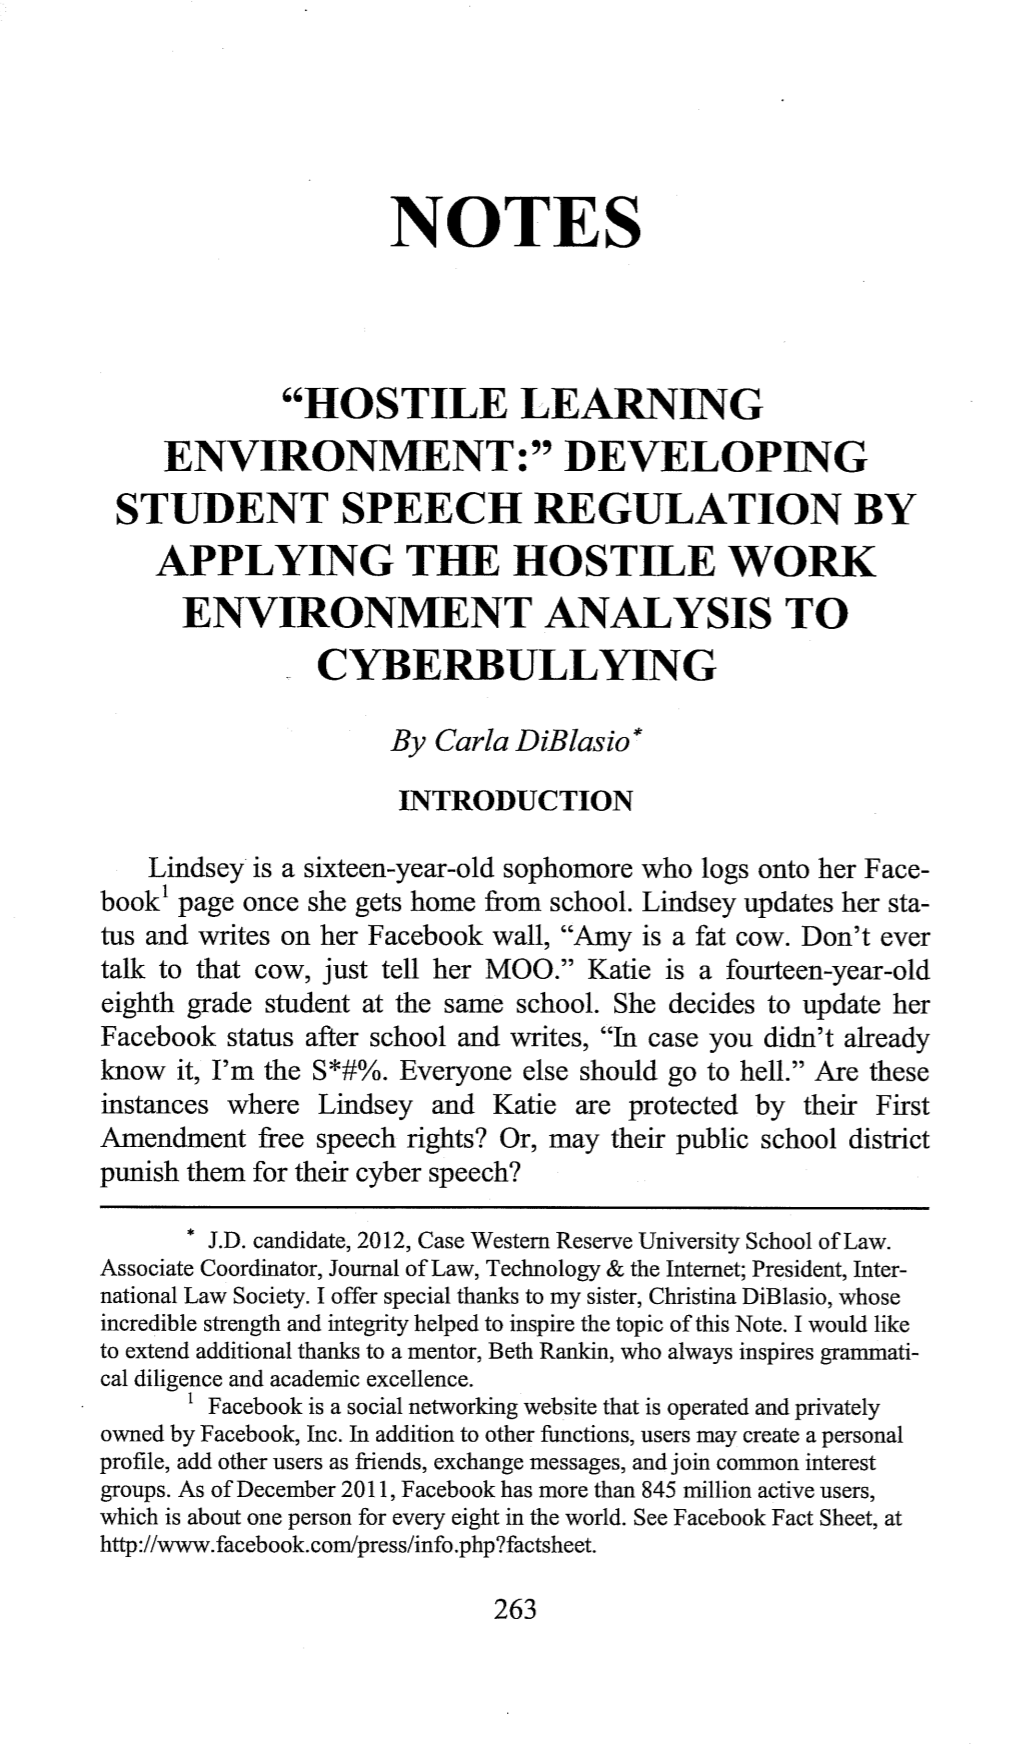 "Hostile Learning Environment:" Developing Student Speech Regulation by Applying the Hostile Work Environment Analysis to Cyberbullying